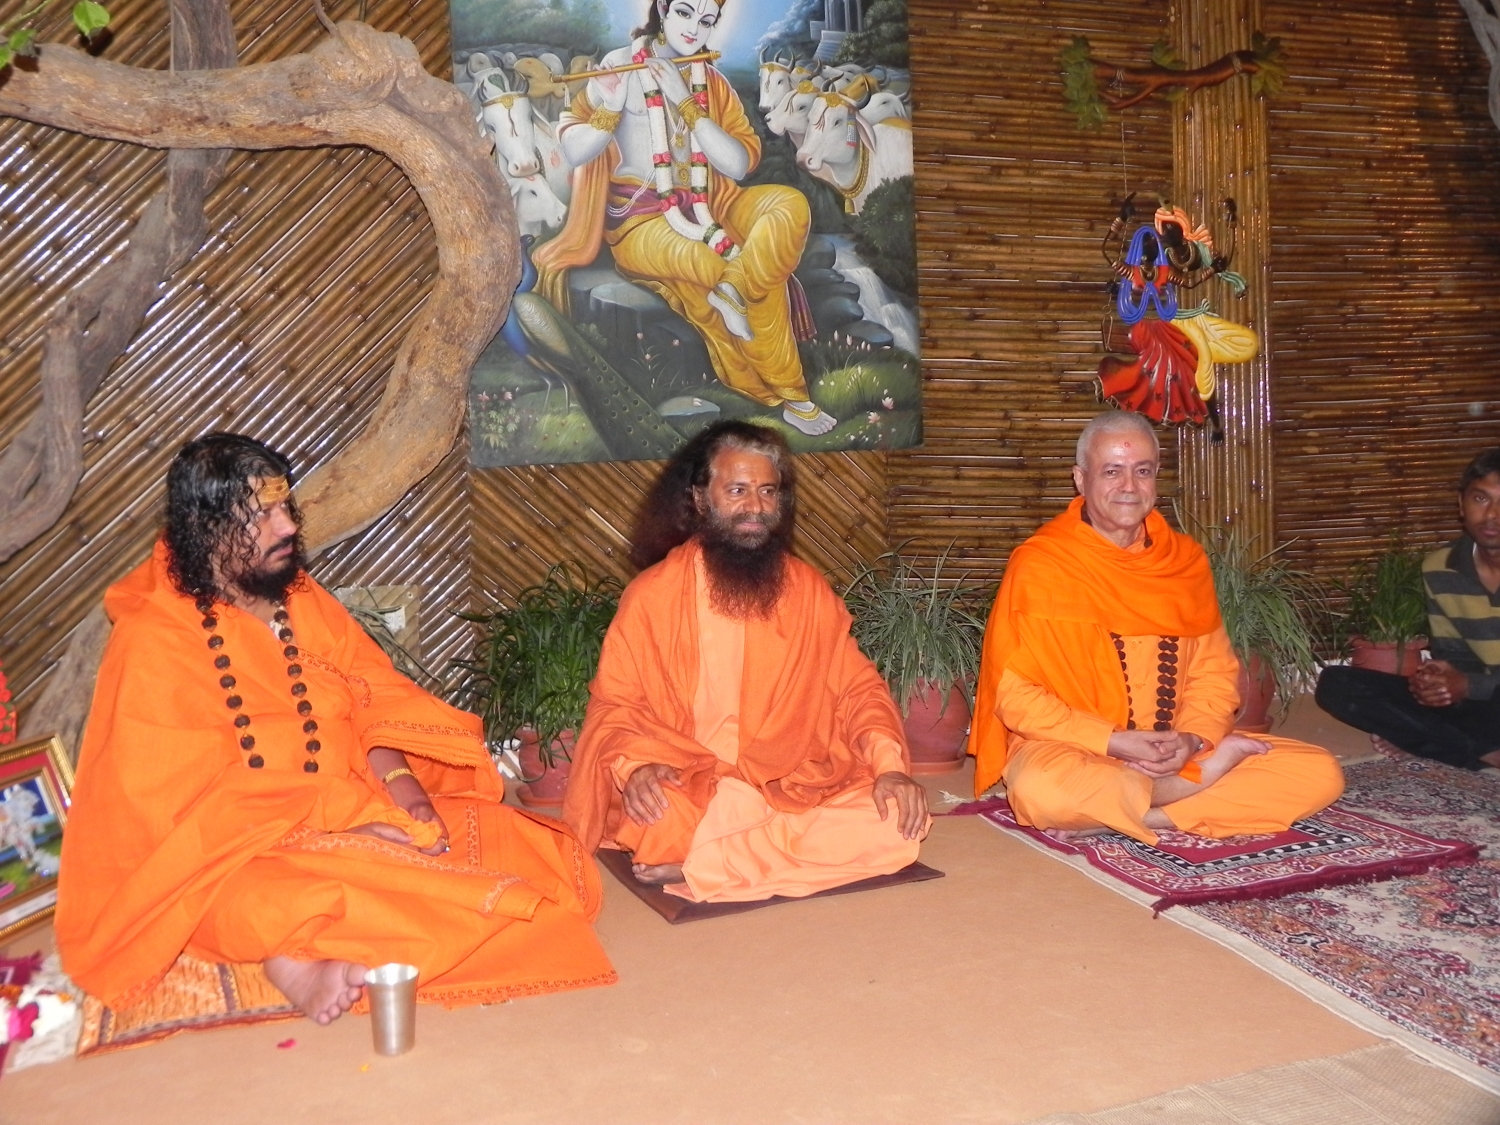 Encontro de H.H. Jagat Guru Amrta Sūryānanda Mahā Rāja com H.H. Pujya Svámin Chidanand Sarasvatiji Maharaj, visita ao Parmarth Niketan Áshrama, rshikesh, Índia - 2013, Março